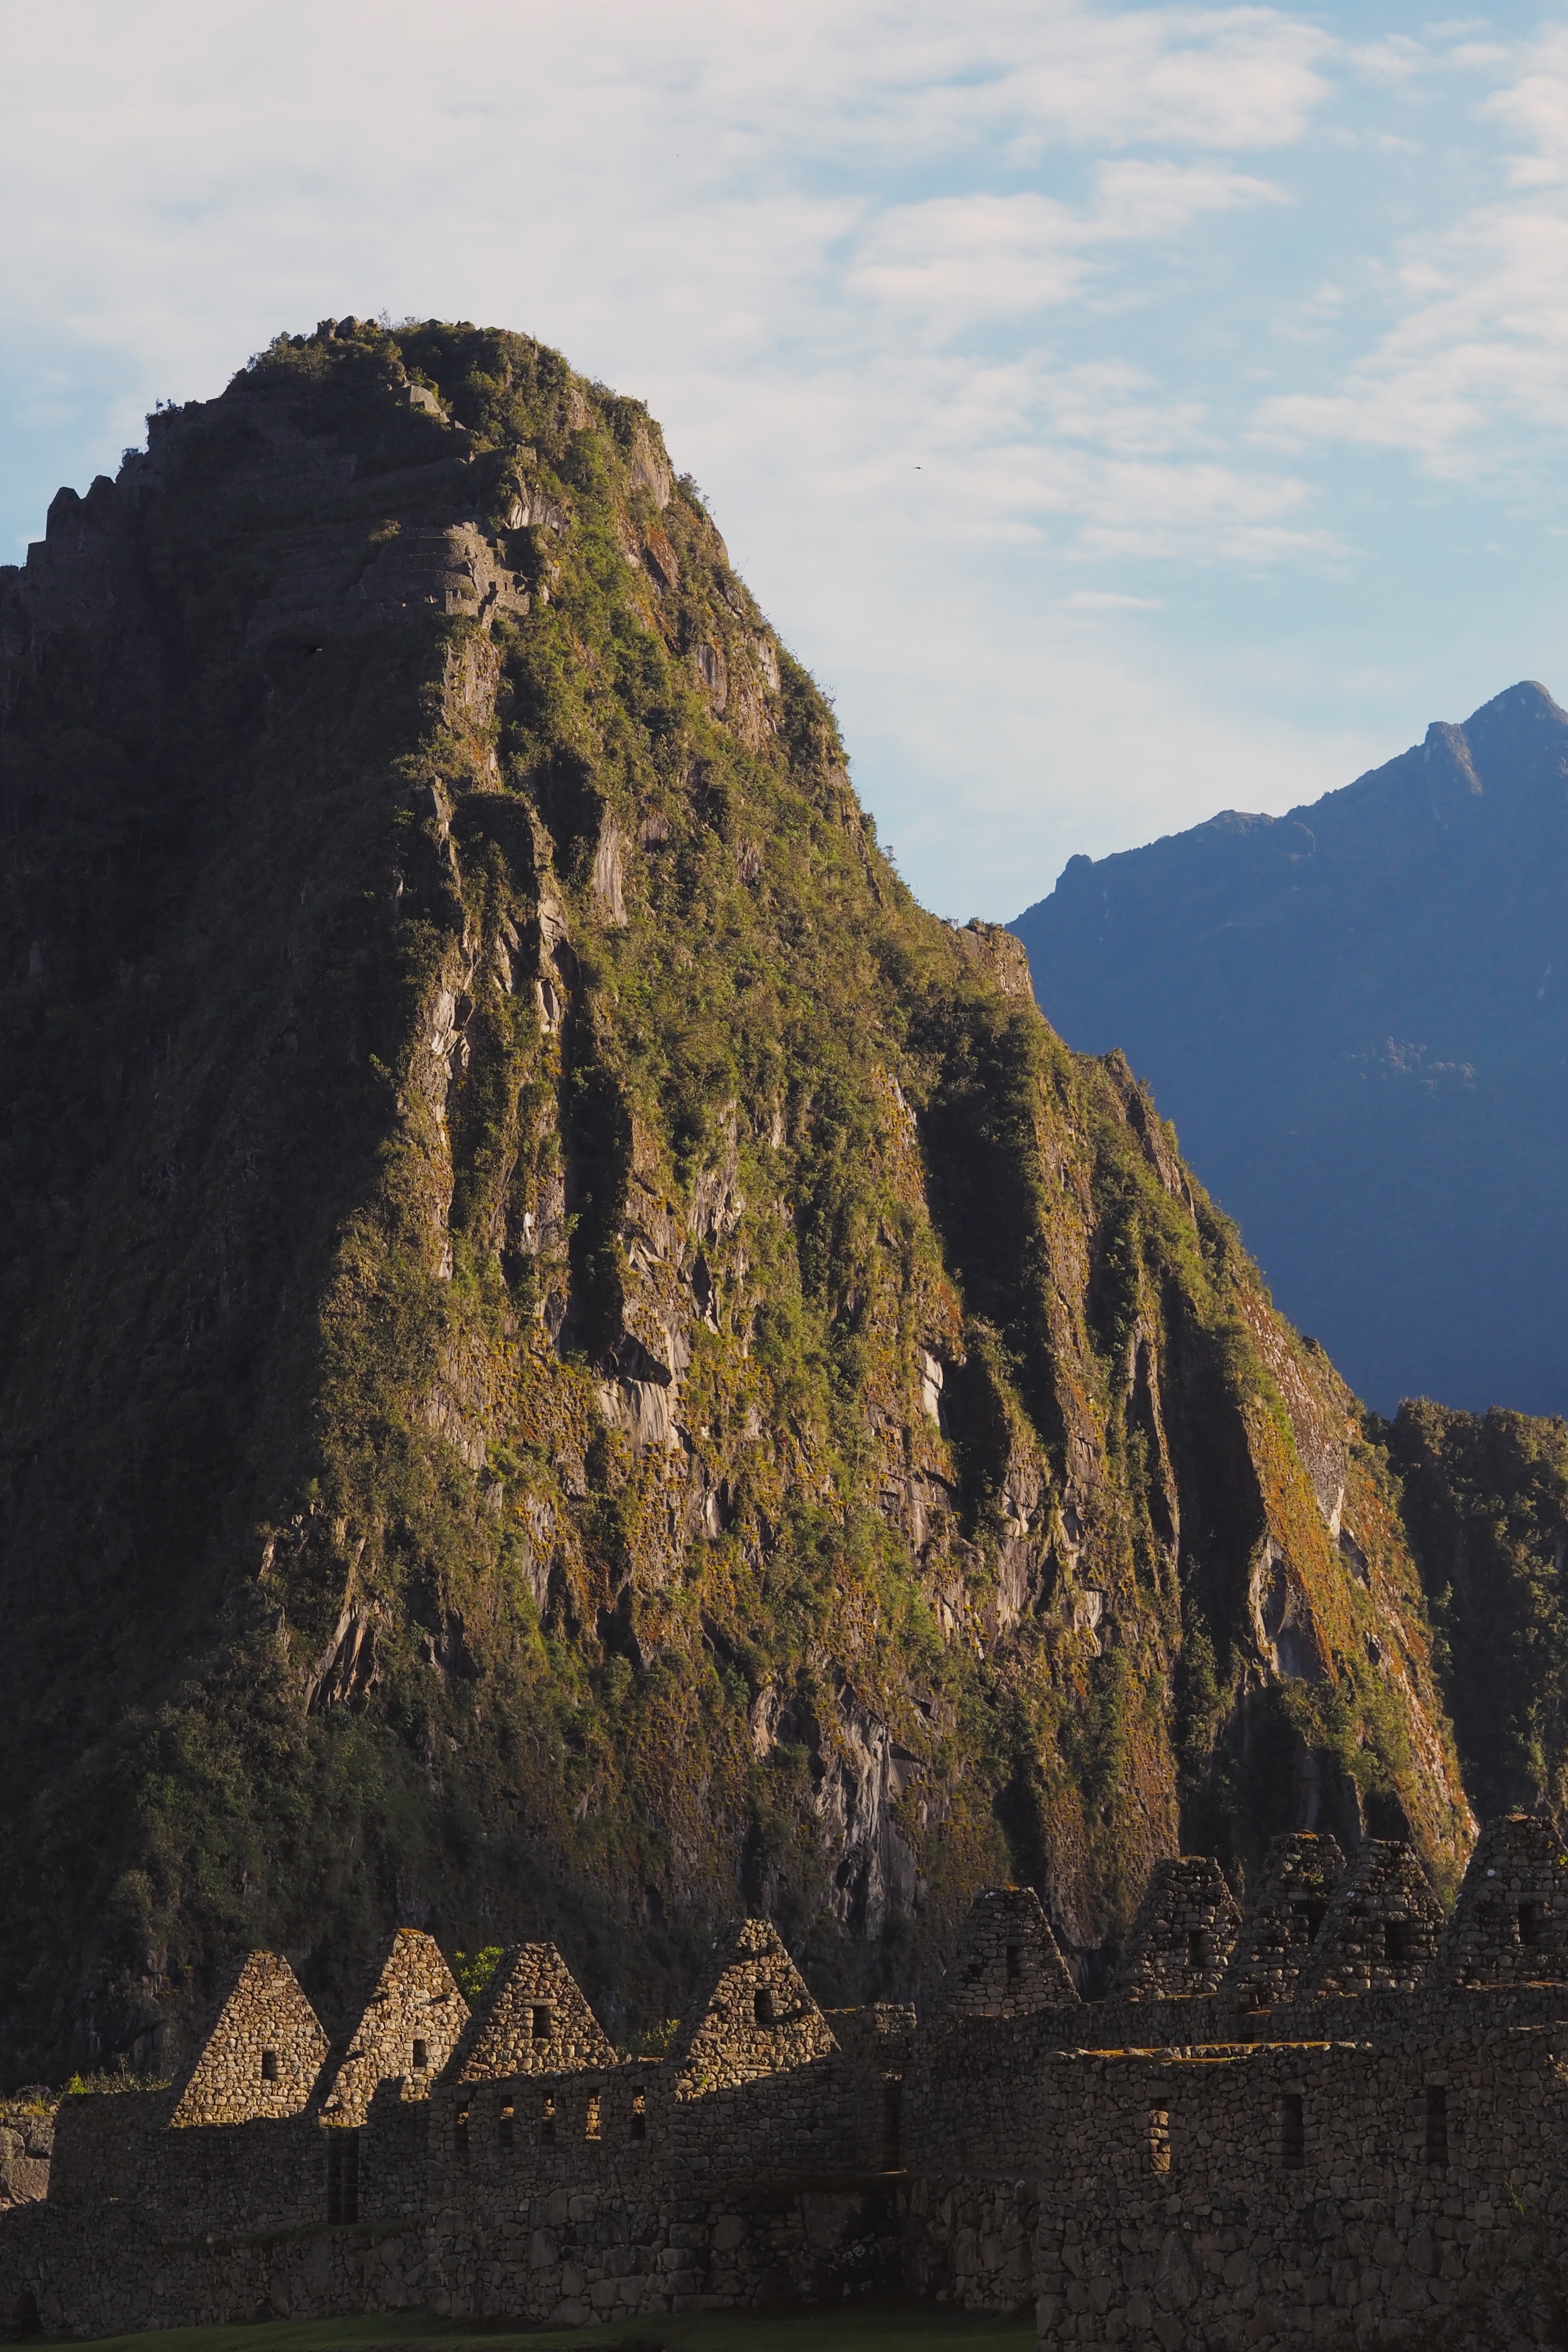 Machu Picchu
Photo by Sean Thoman 